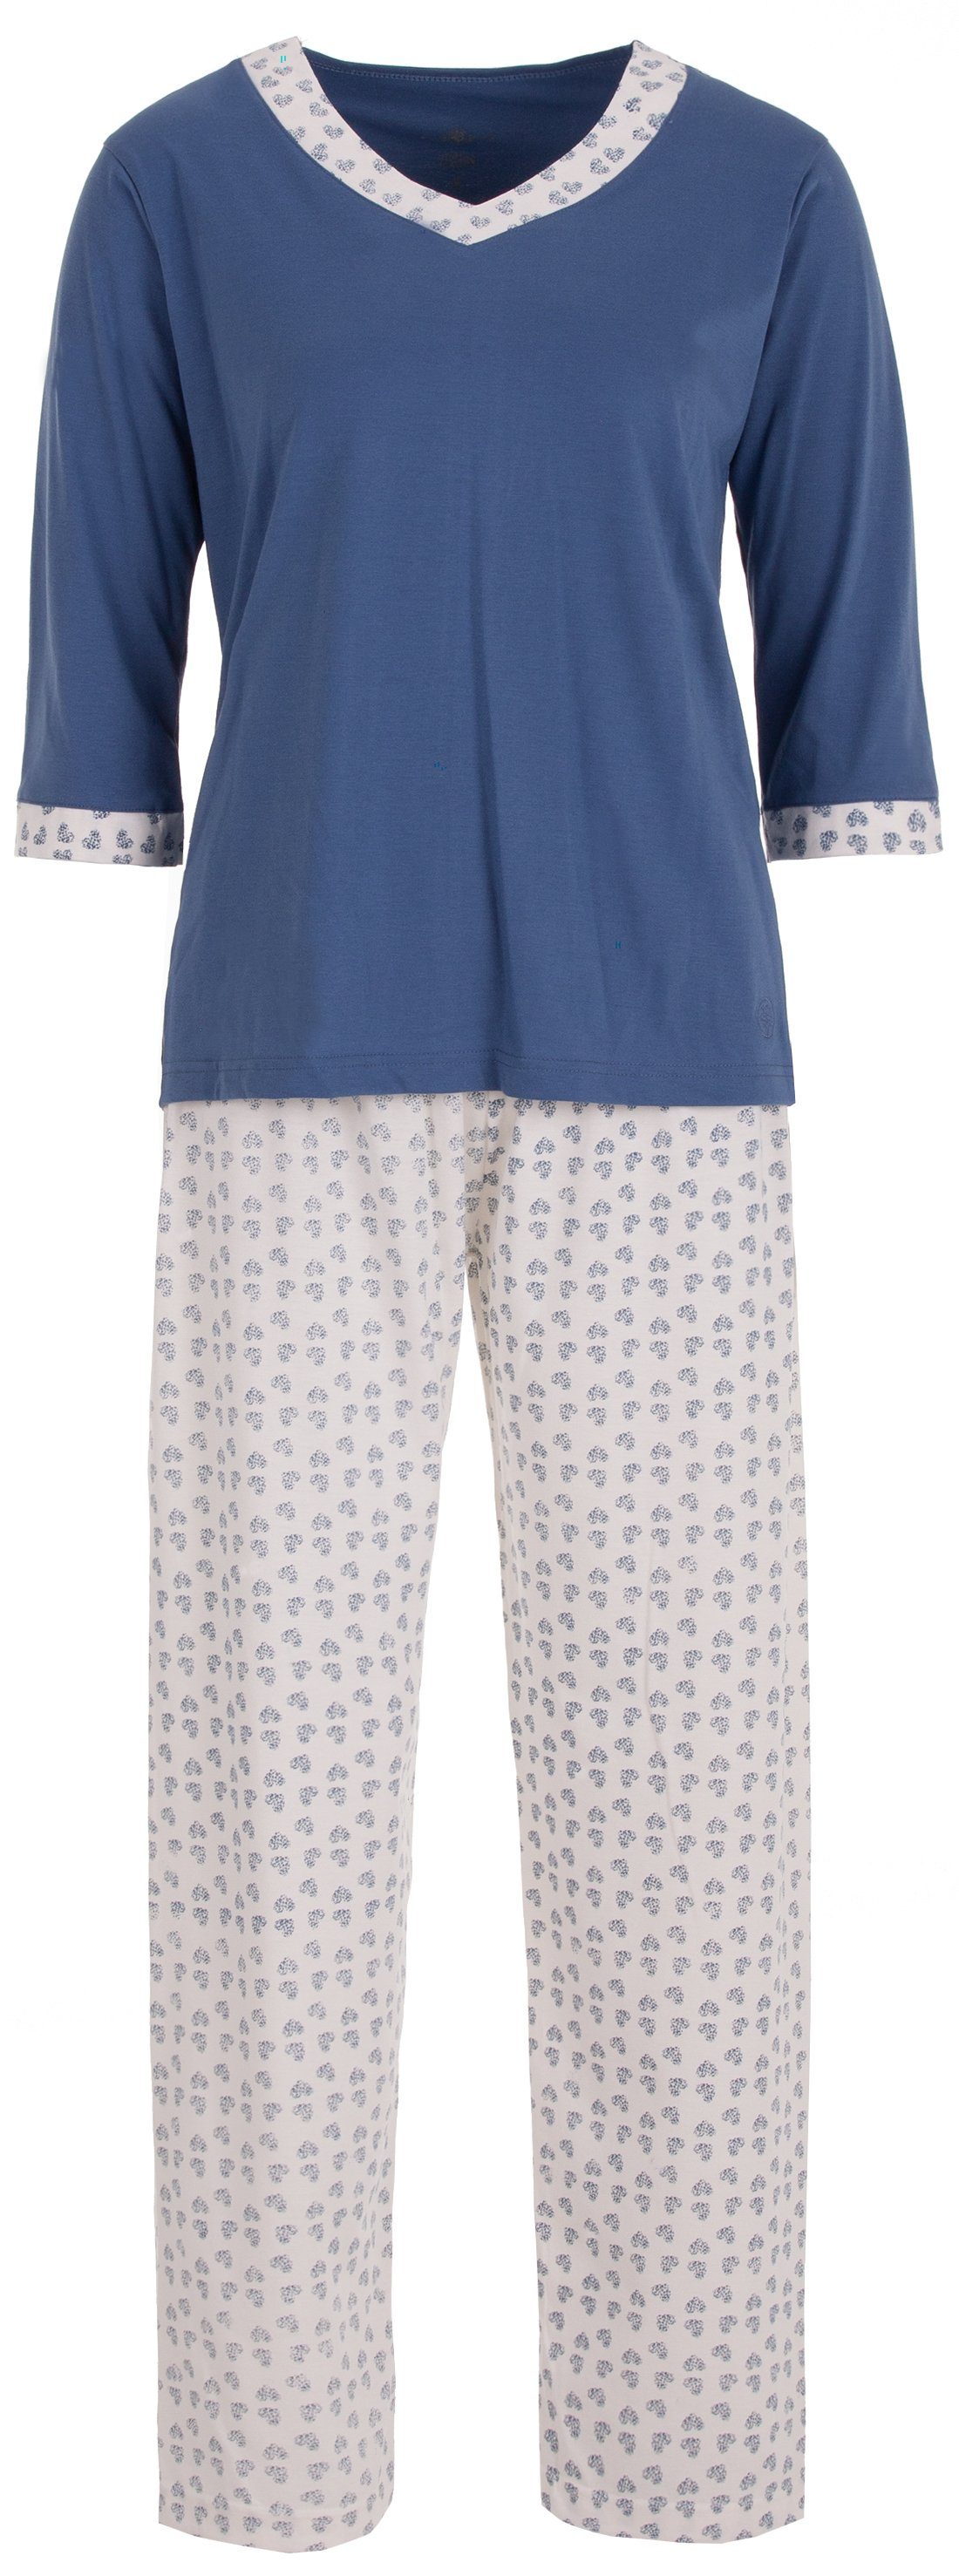 Arm Set Heart Pyjama - 3/4 Schlafanzug blau zeitlos